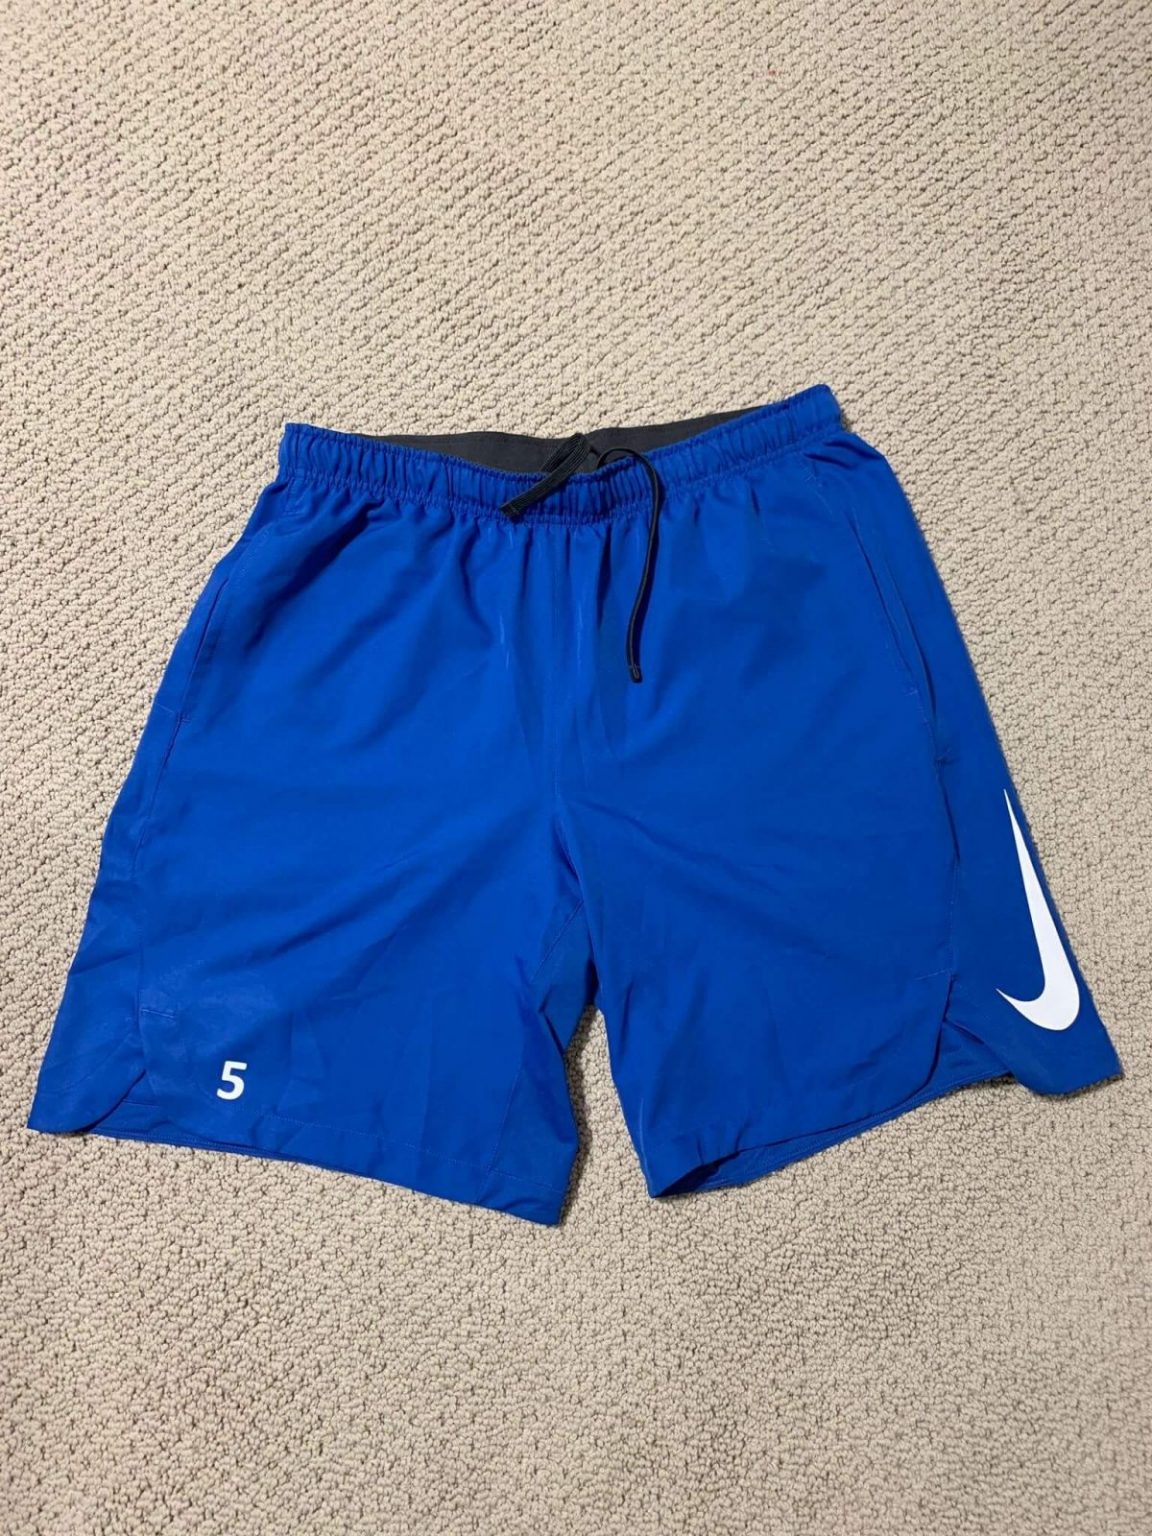 TJ Collet Kentucky Baseball Nike Dri-Fit Shorts : NARP Clothing